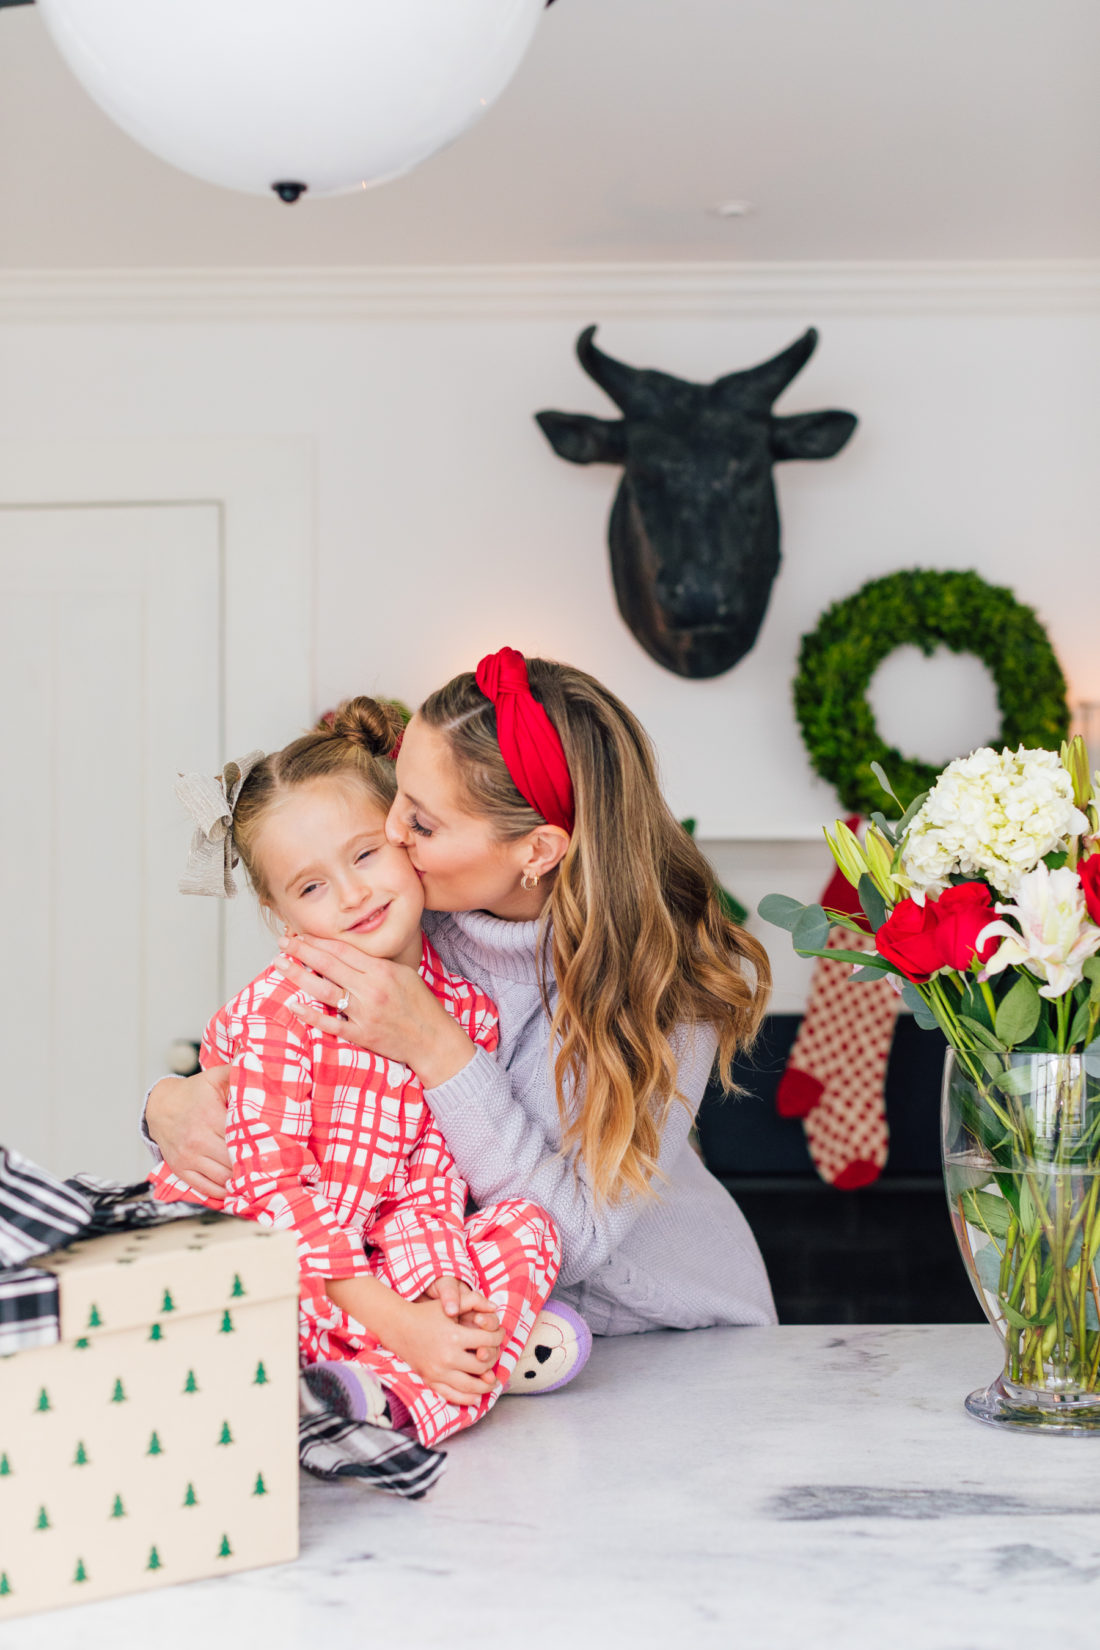 Eva Amurri Martino kisses daughter Marlowe while they wrap Christmas presents